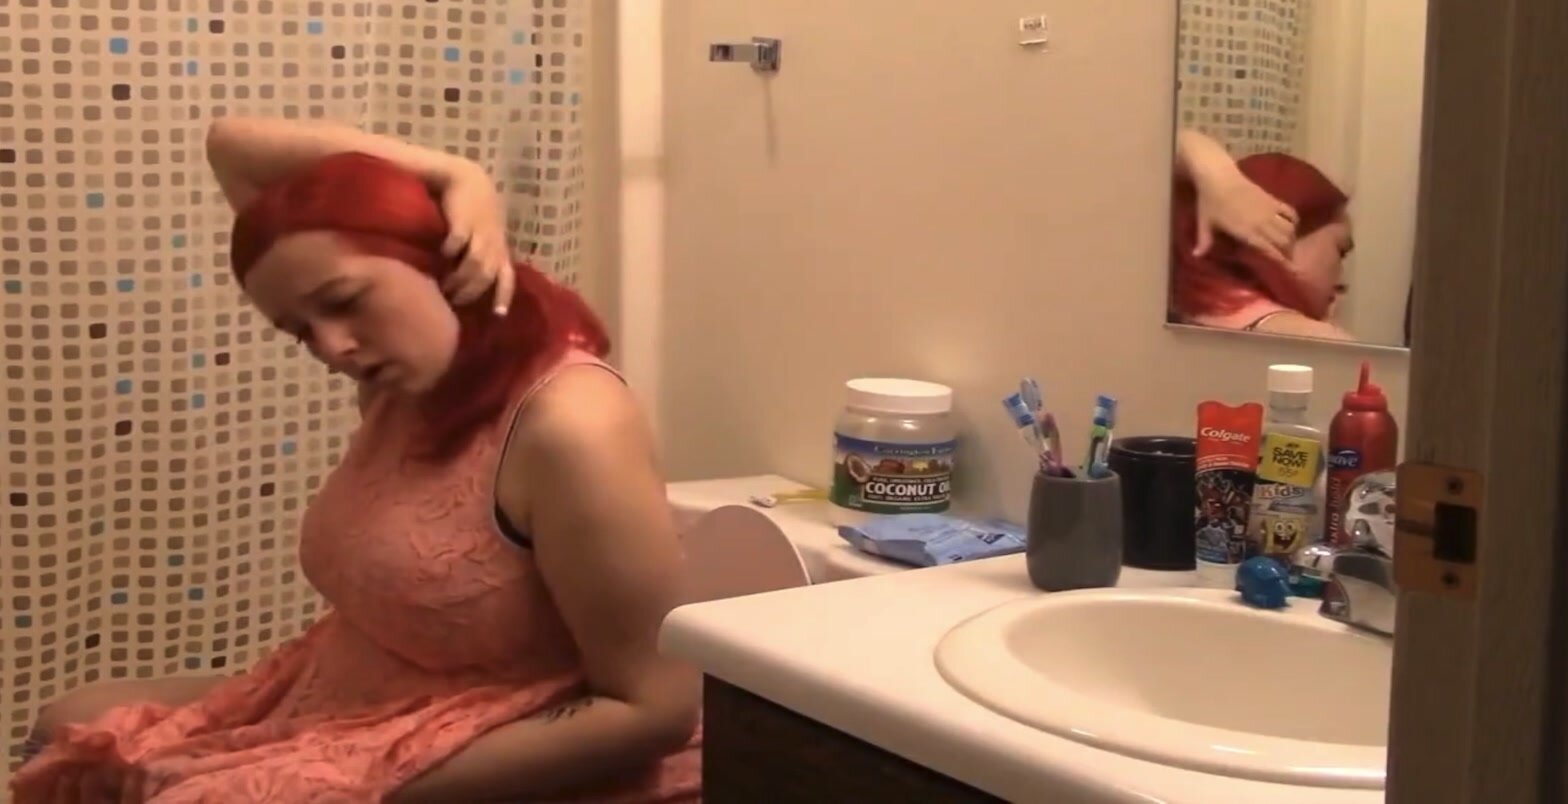 Redhead desperation diarrhea pic